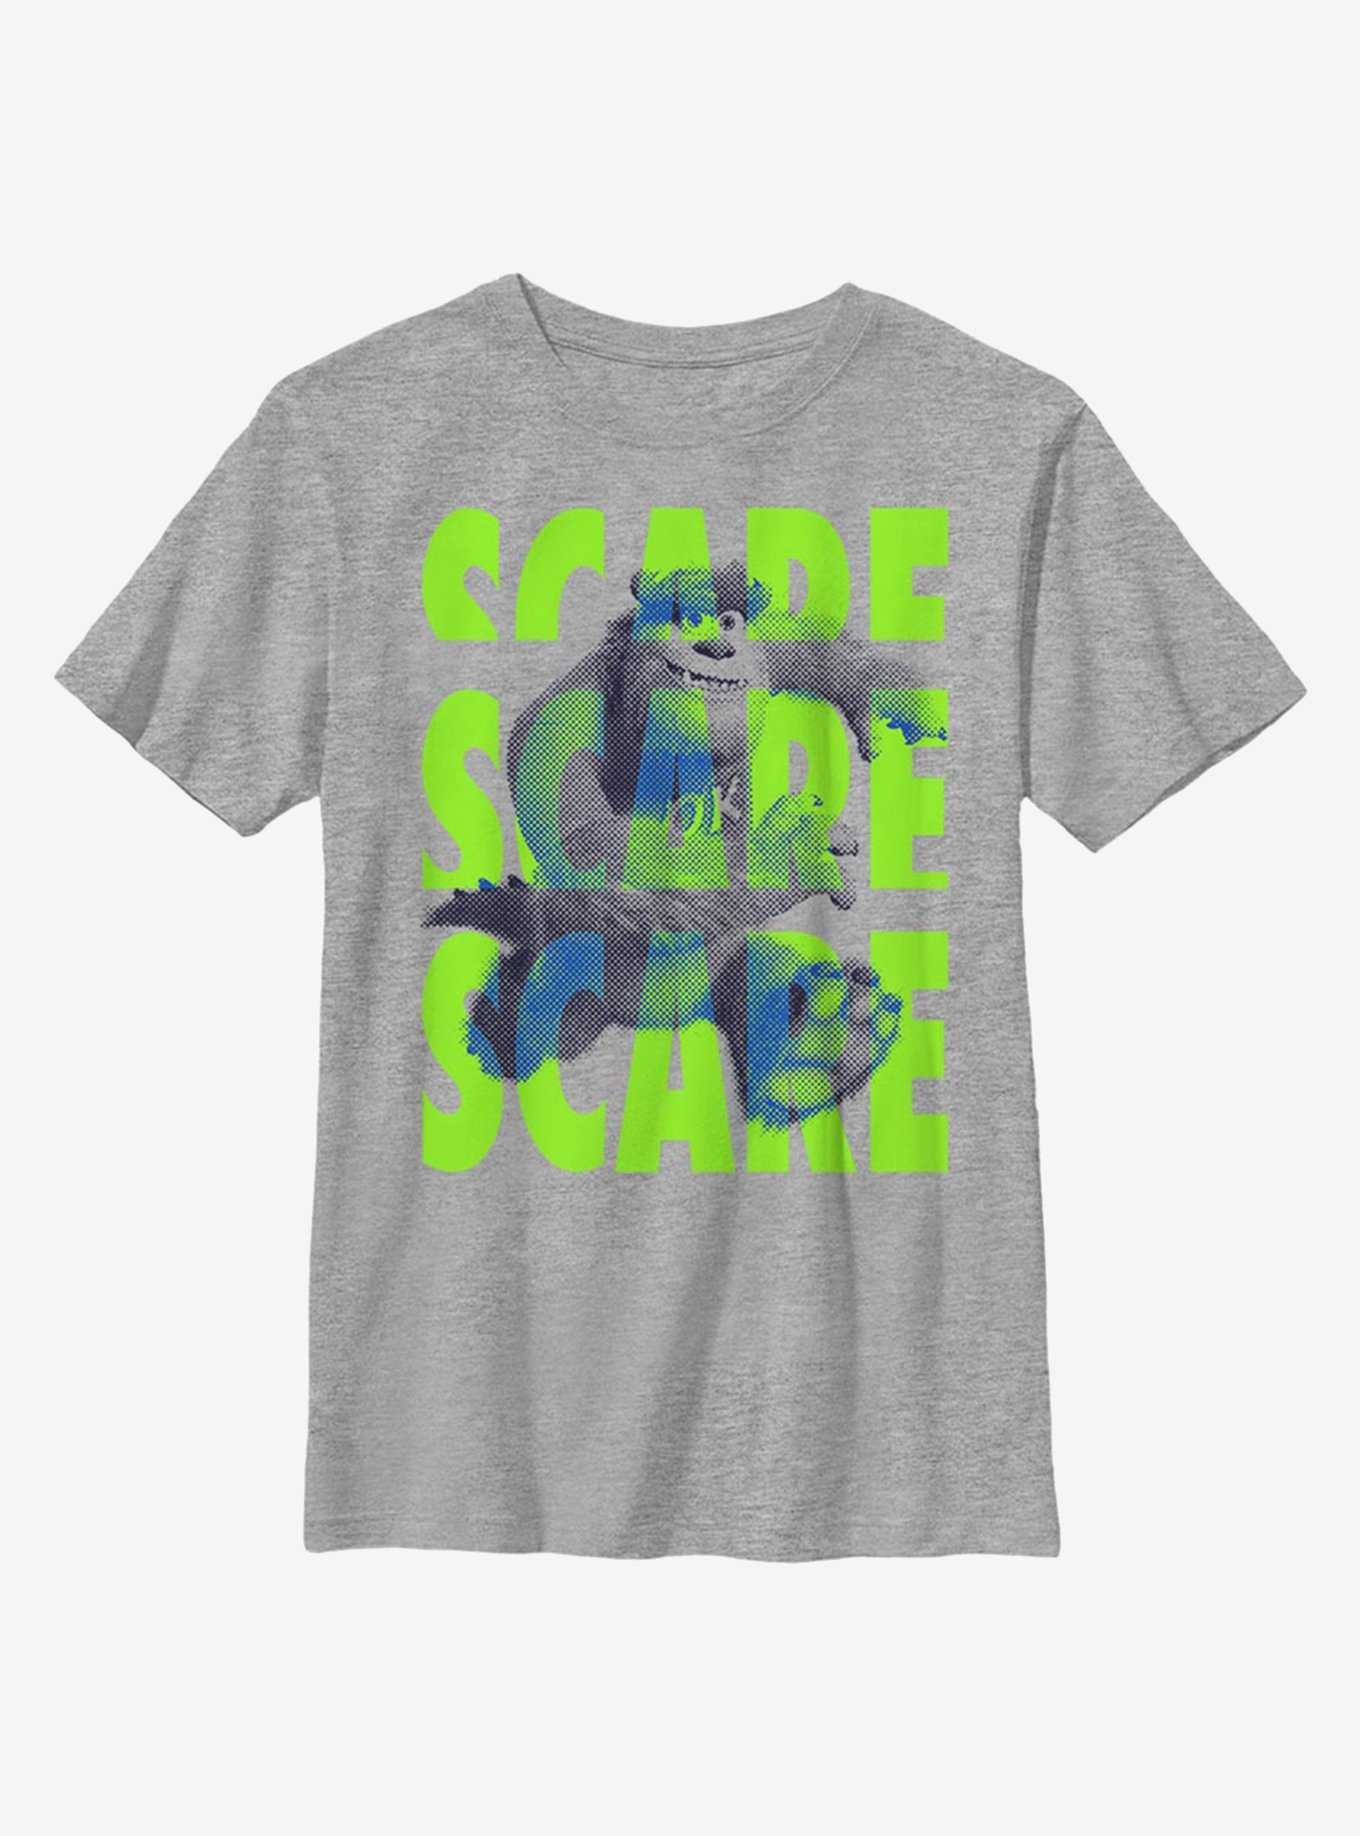 Disney Pixar Monsters, Inc. Sully Run Youth T-Shirt, , hi-res